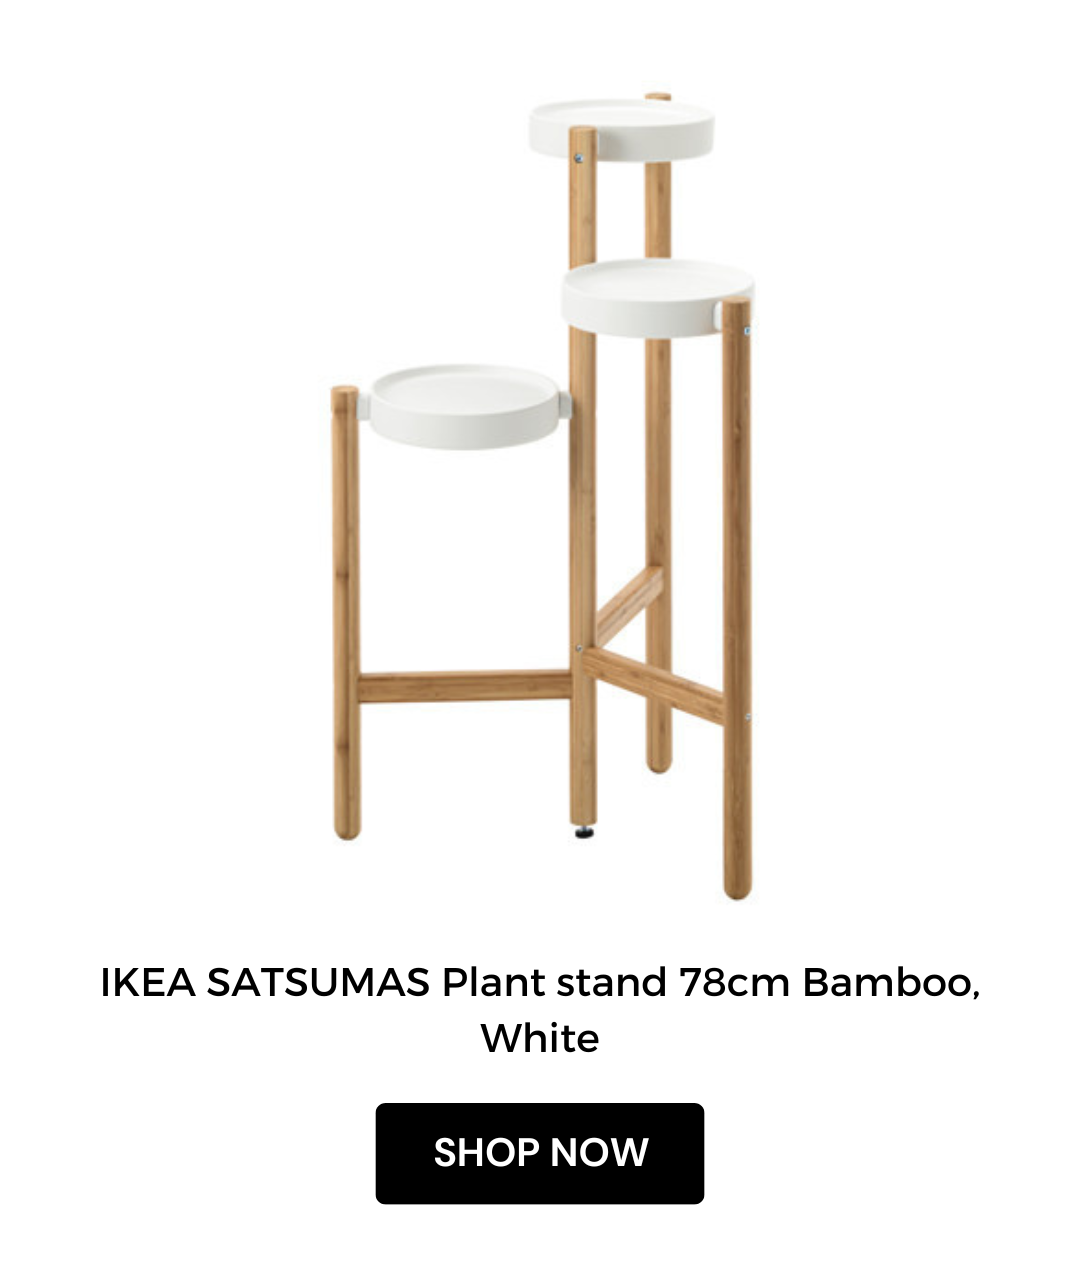 IKEA SATSUMAS Plant stand 78cm Bamboo, White